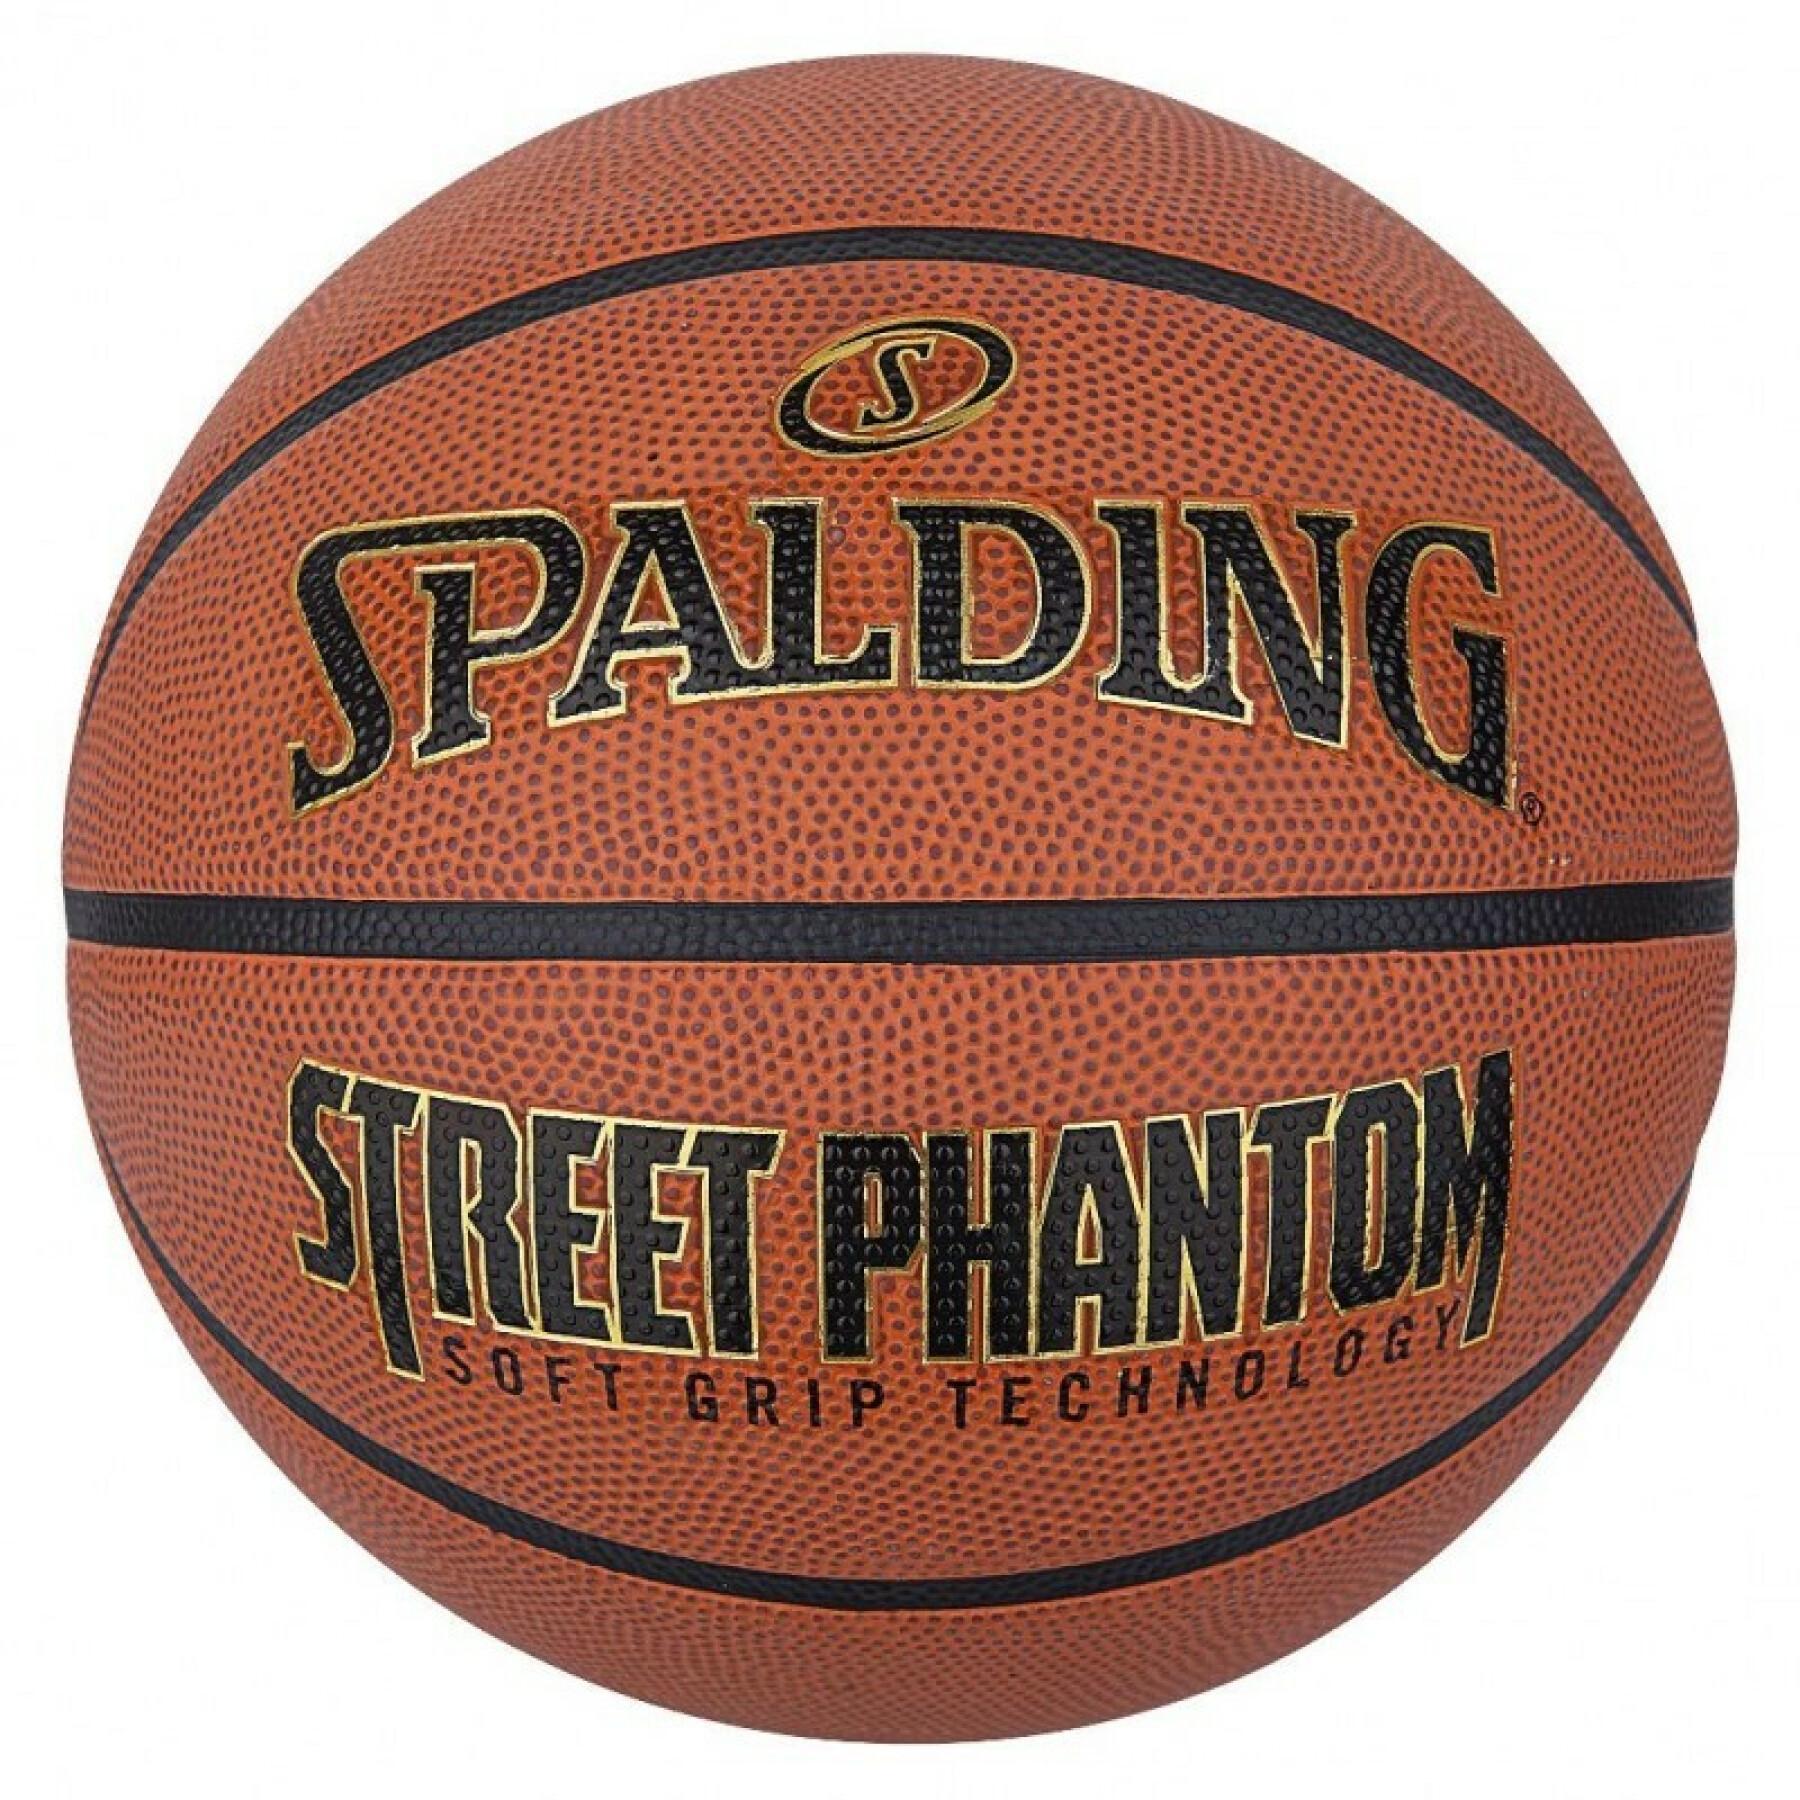 Ballon Spalding Street Phantom Two Tone